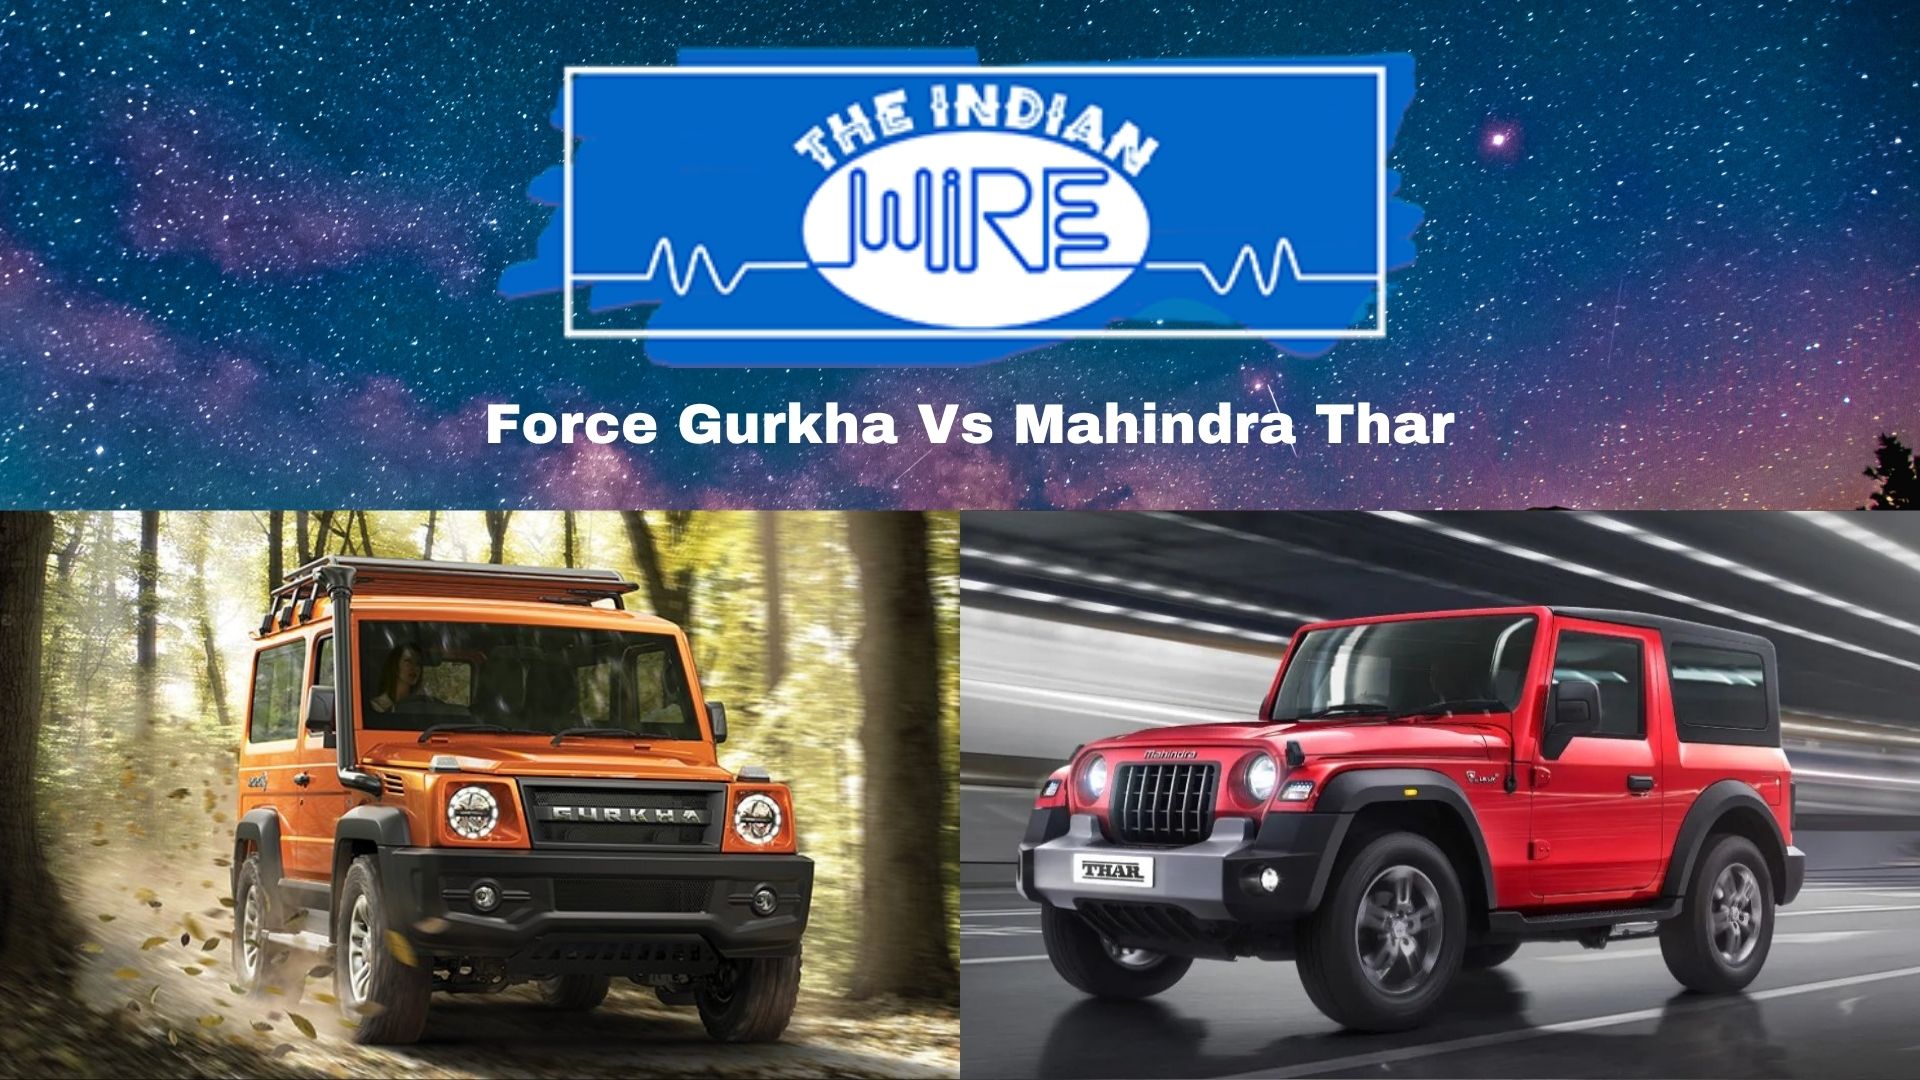 Force Gurkha Vs Mahindra Thar